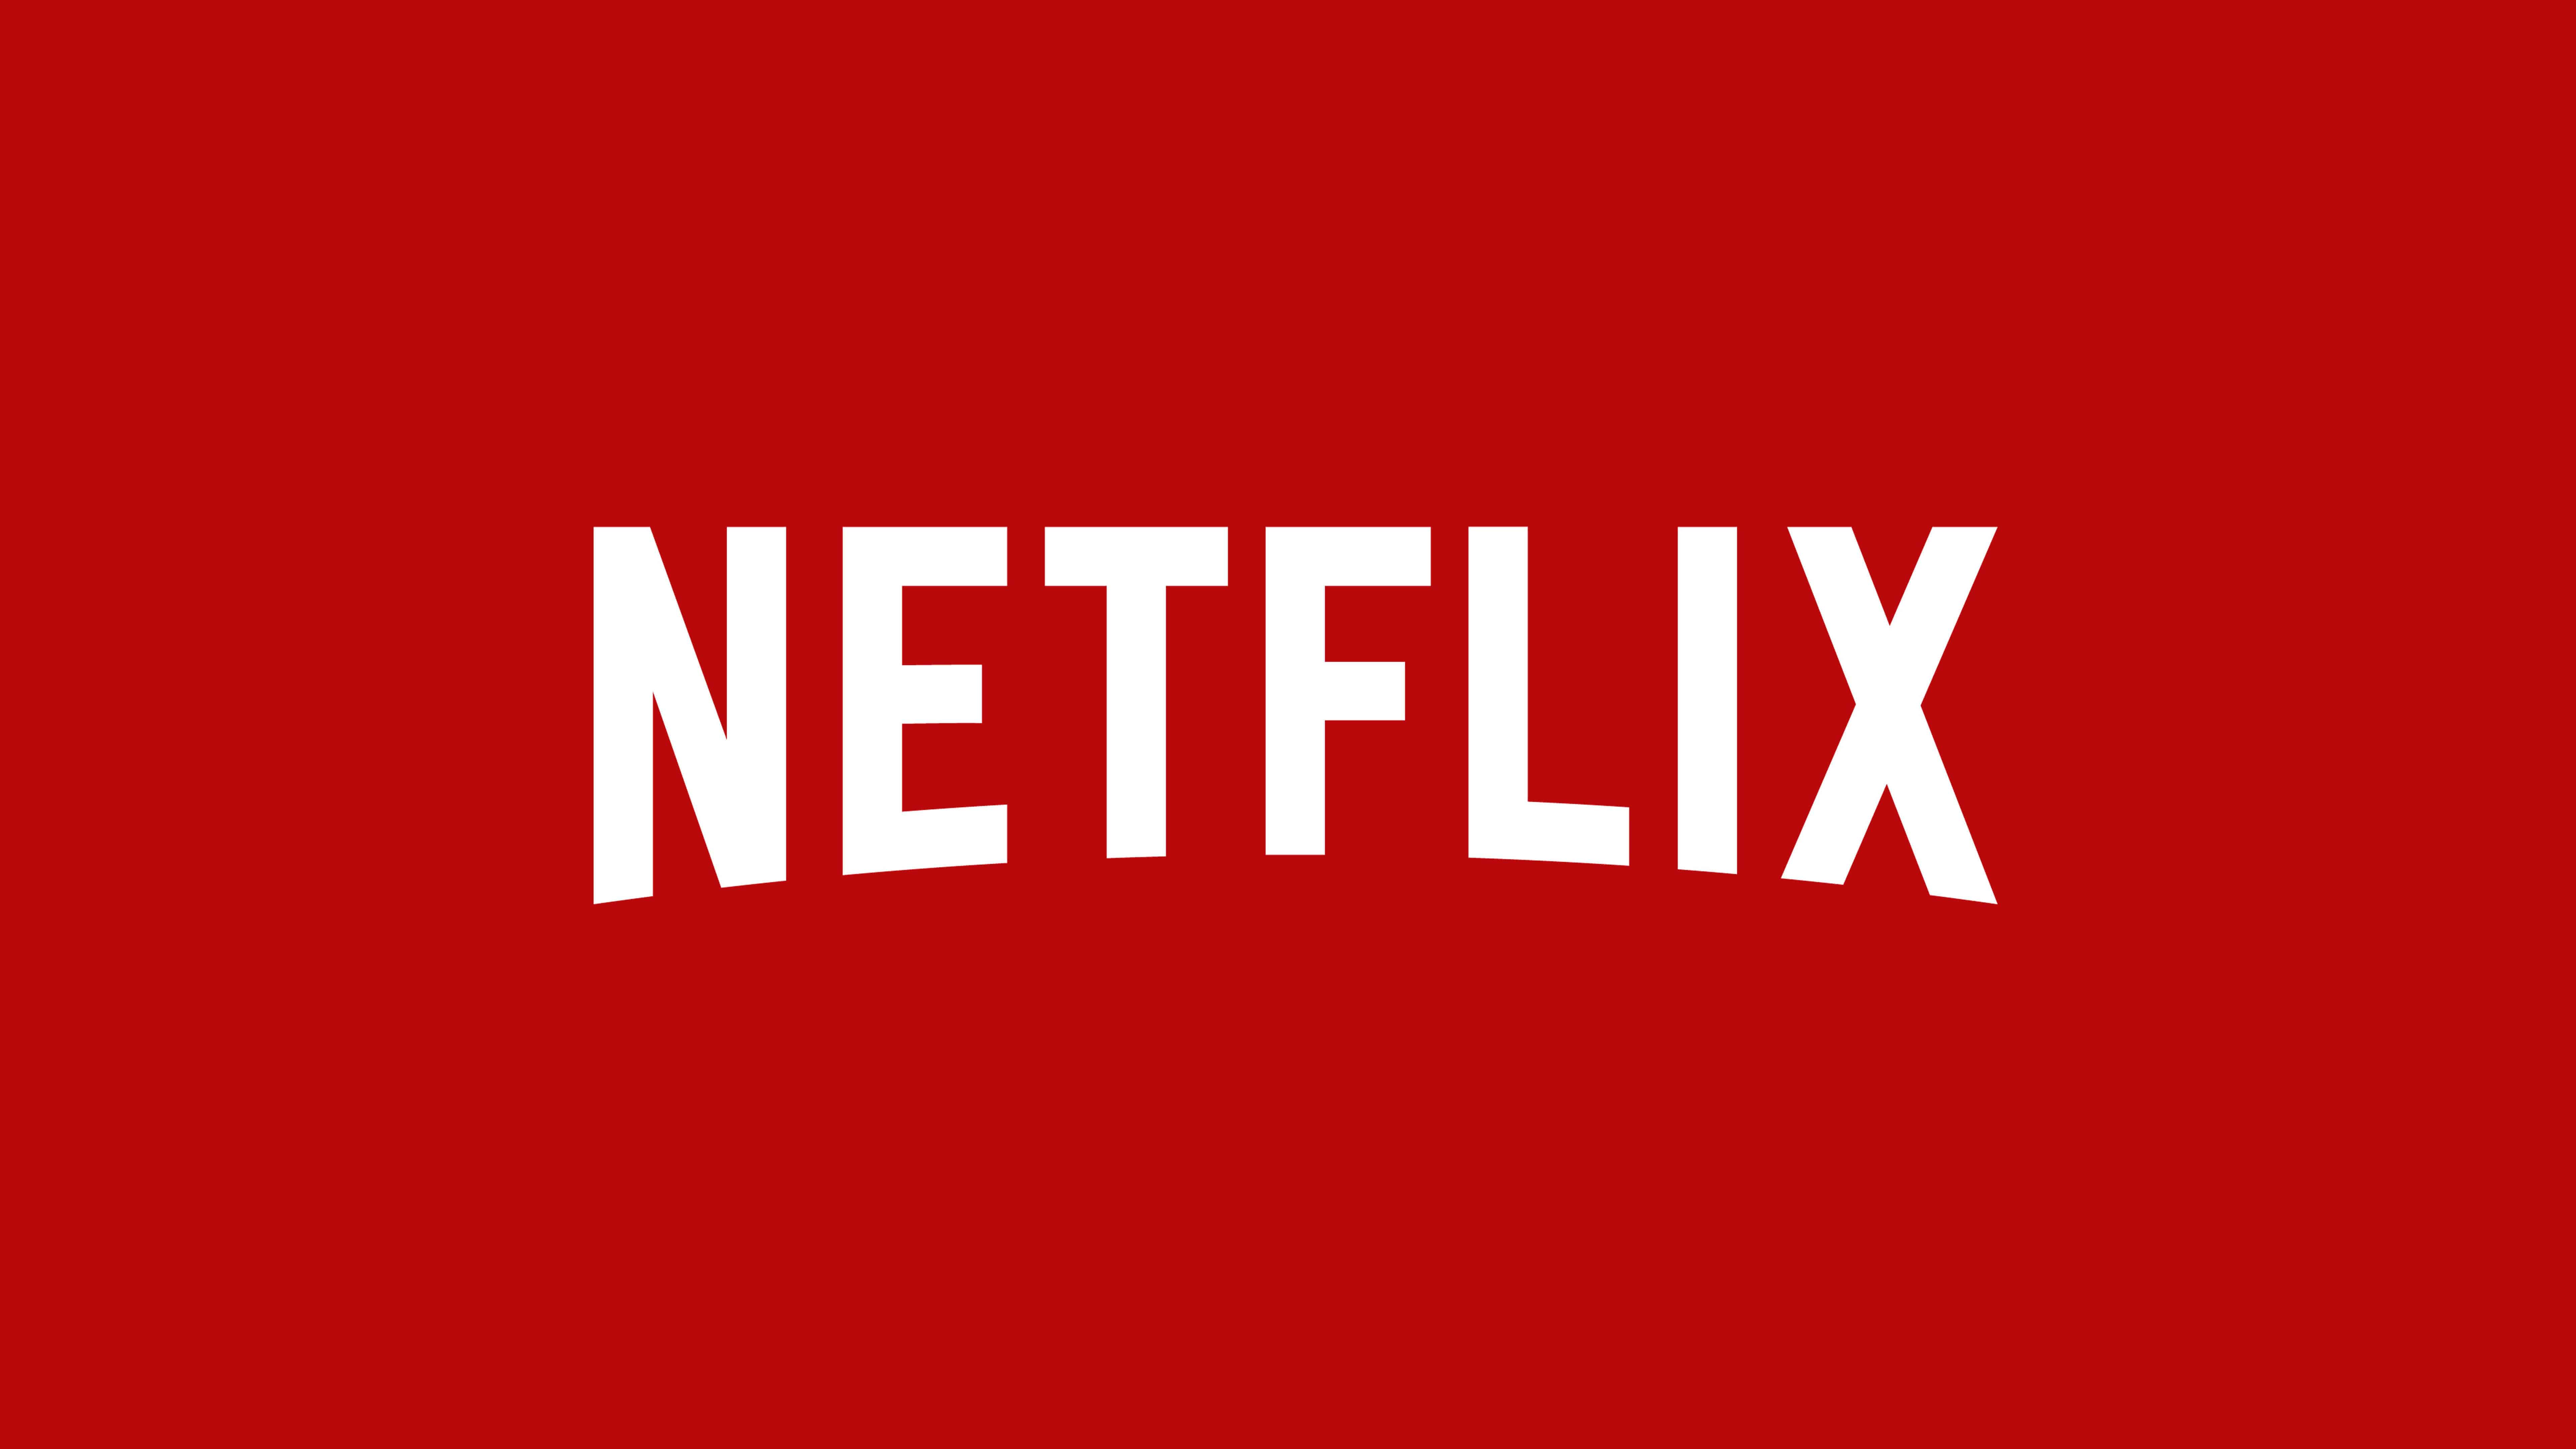 Free download Netflix Logo UHD 8K Wallpaper Pixelz [7680x4320] for your Desktop, Mobile & Tablet. Explore Netflix Wallpaper. Netflix Daredevil Wallpaper, Netflix Daredevil HD Wallpaper, Dark Netflix Wallpaper